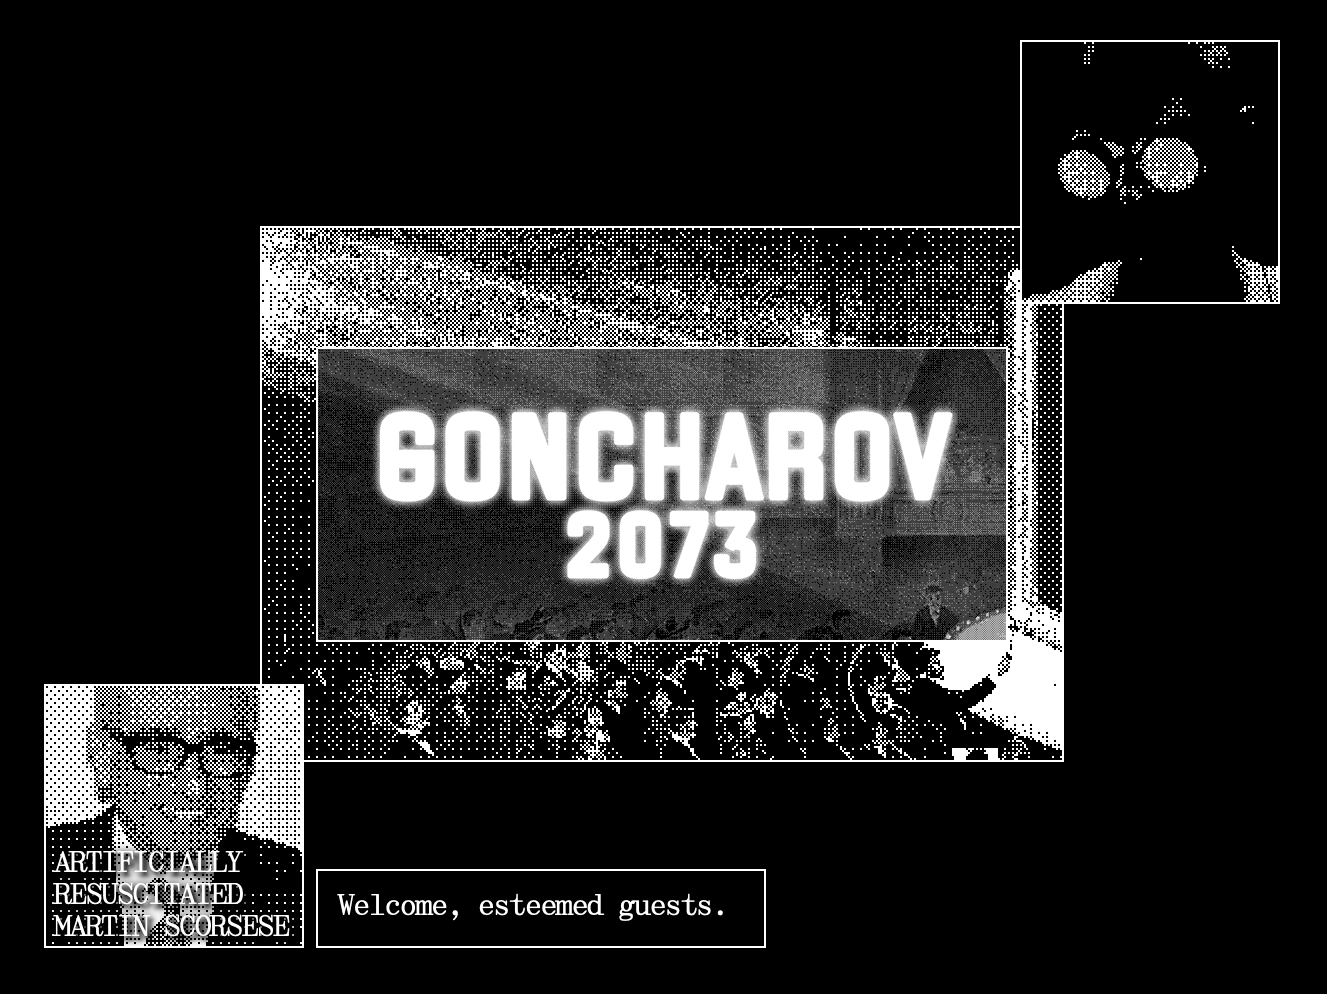 goncharov-2073-by-sweetfish